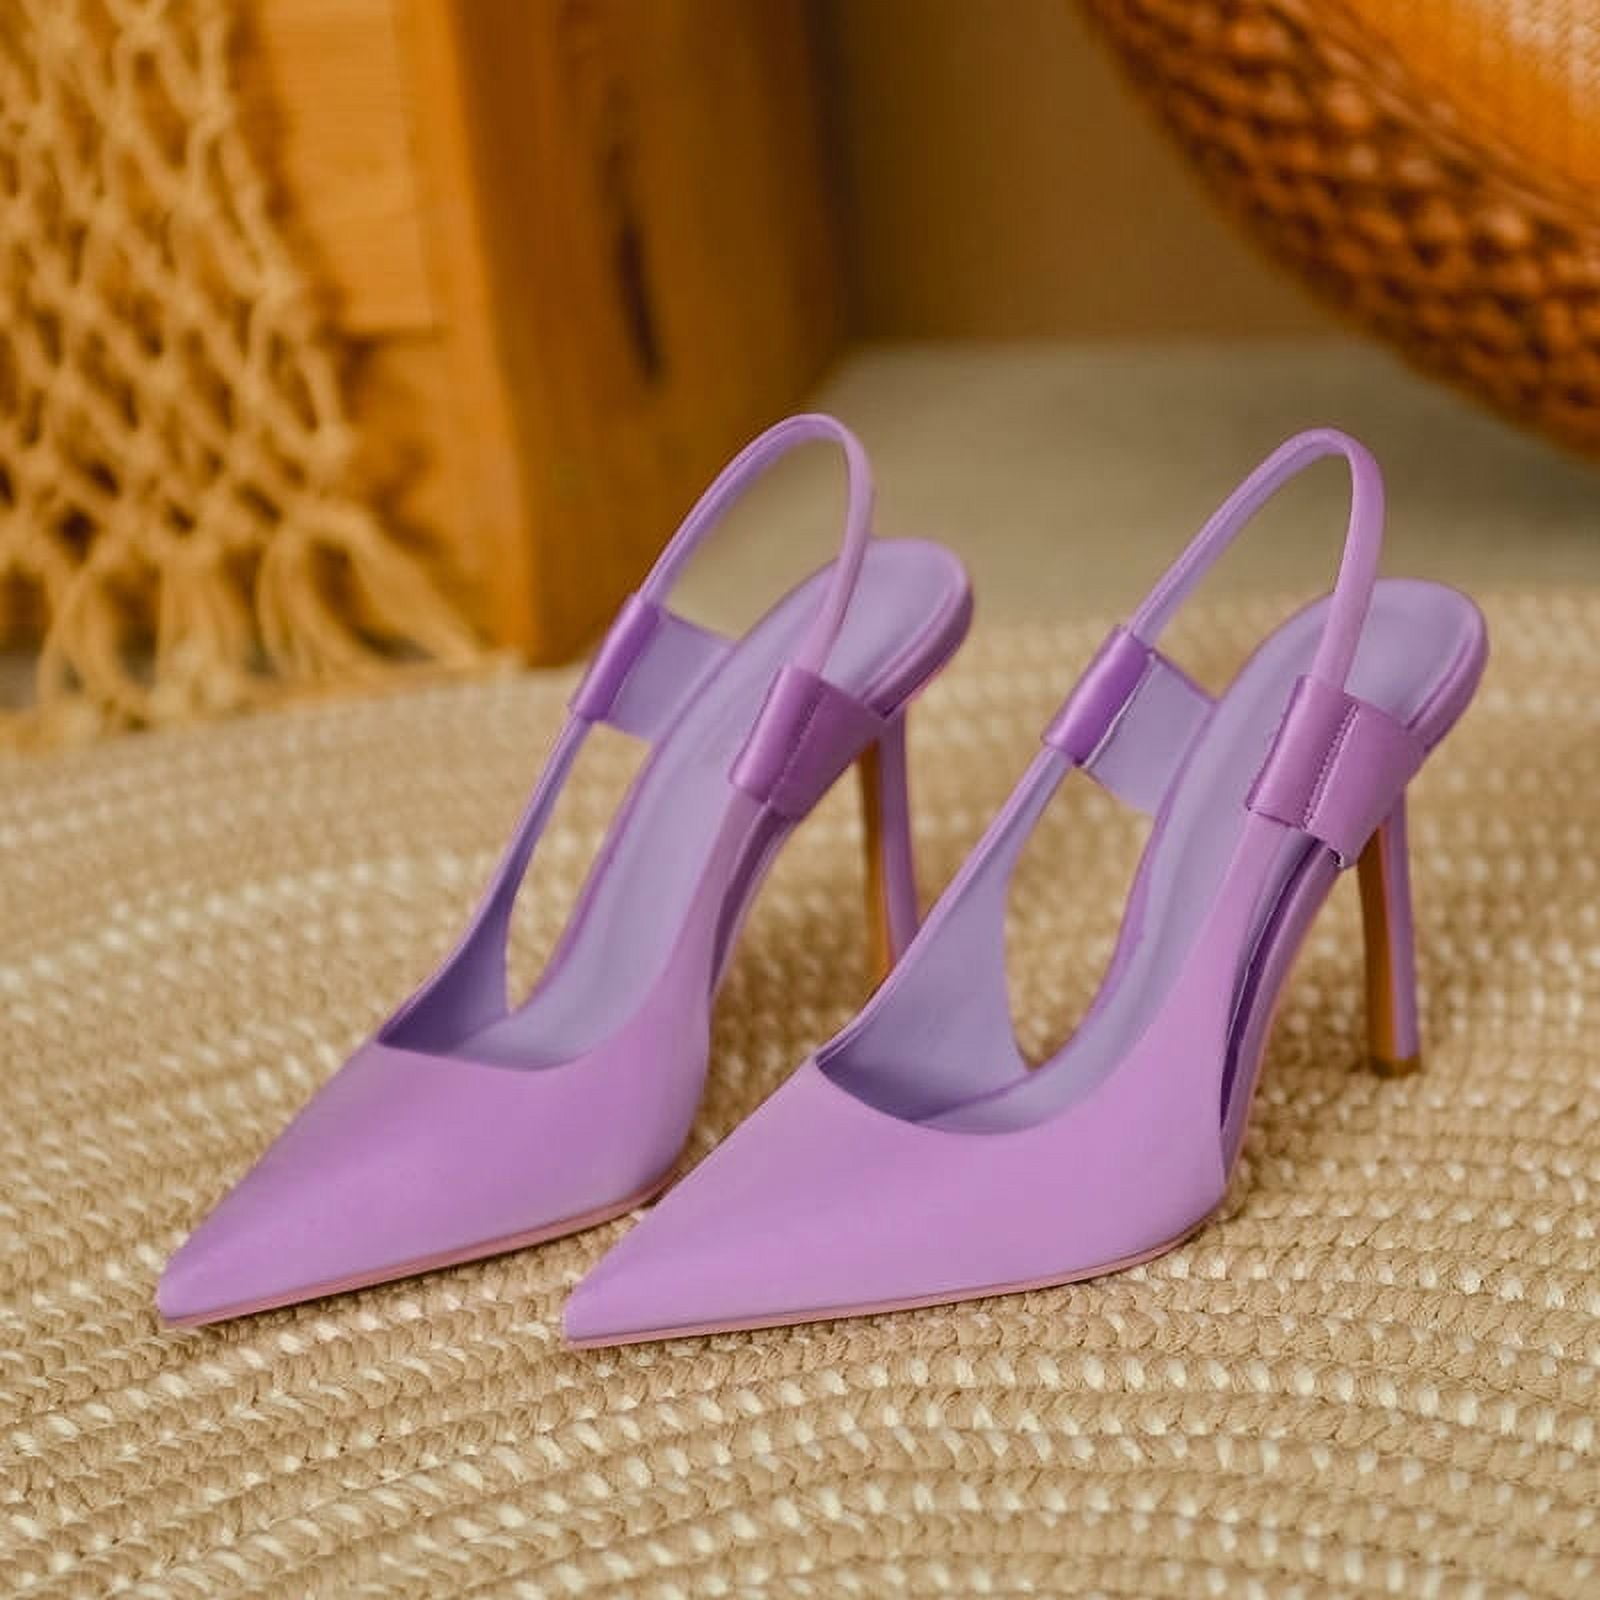 1 Set Italian Design Shoes And Bag Rhinestone Crystal Women Fashion High  Heels | eBay